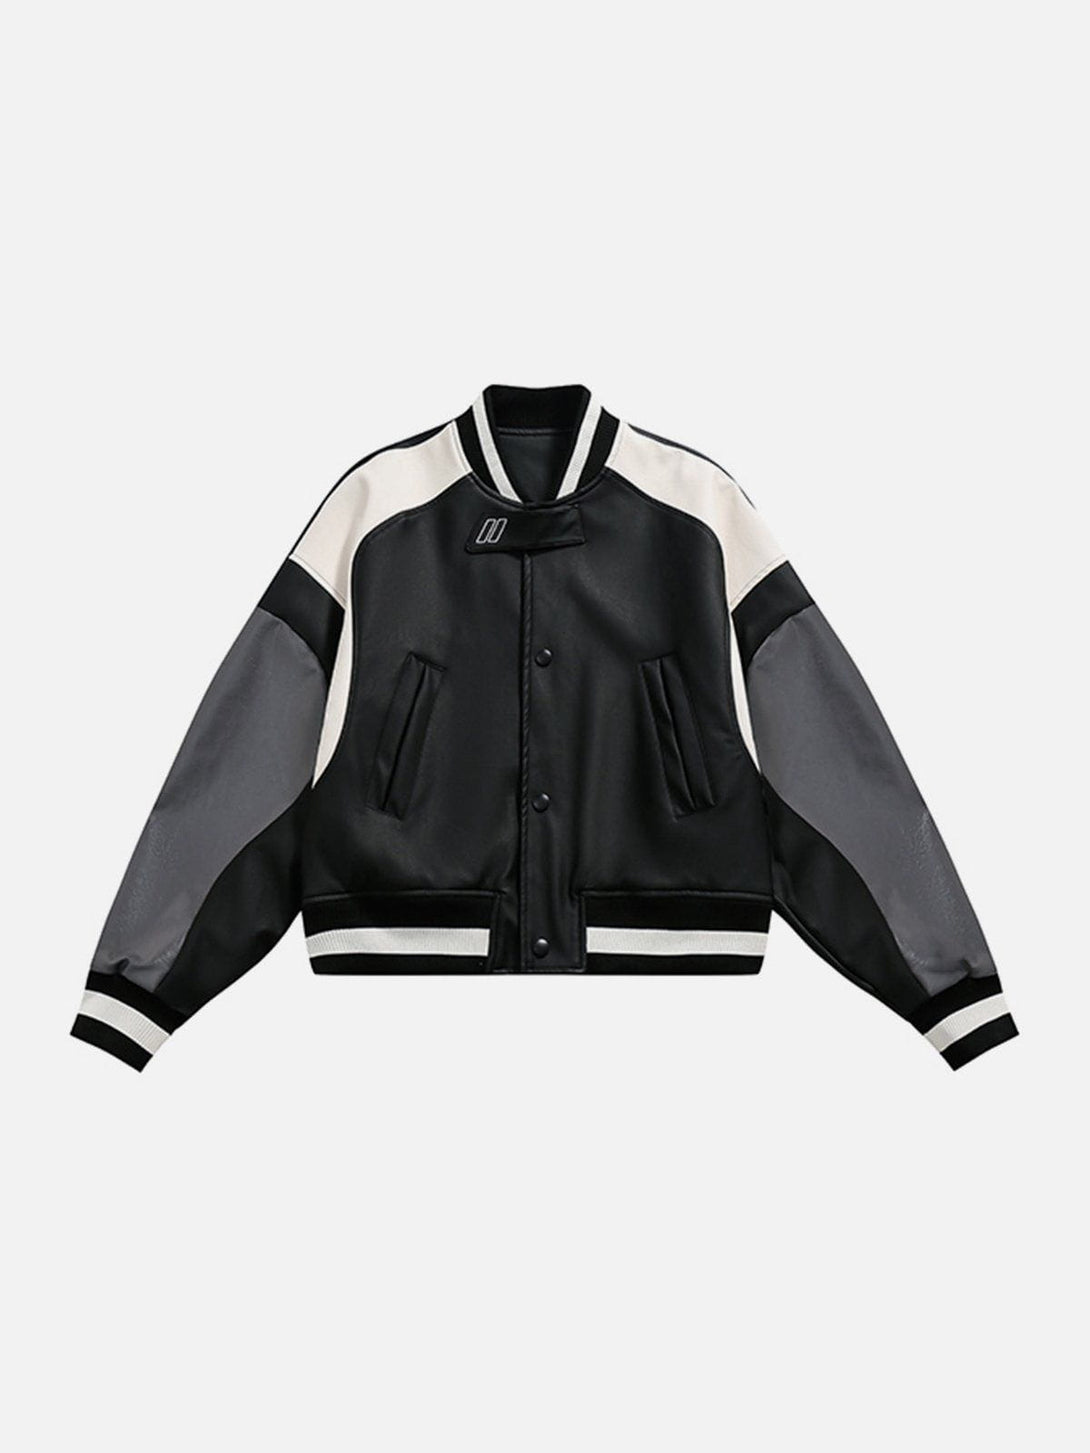 Majesda® - Multicolor Patchwork PU Leather Jackets- Outfit Ideas - Streetwear Fashion - majesda.com